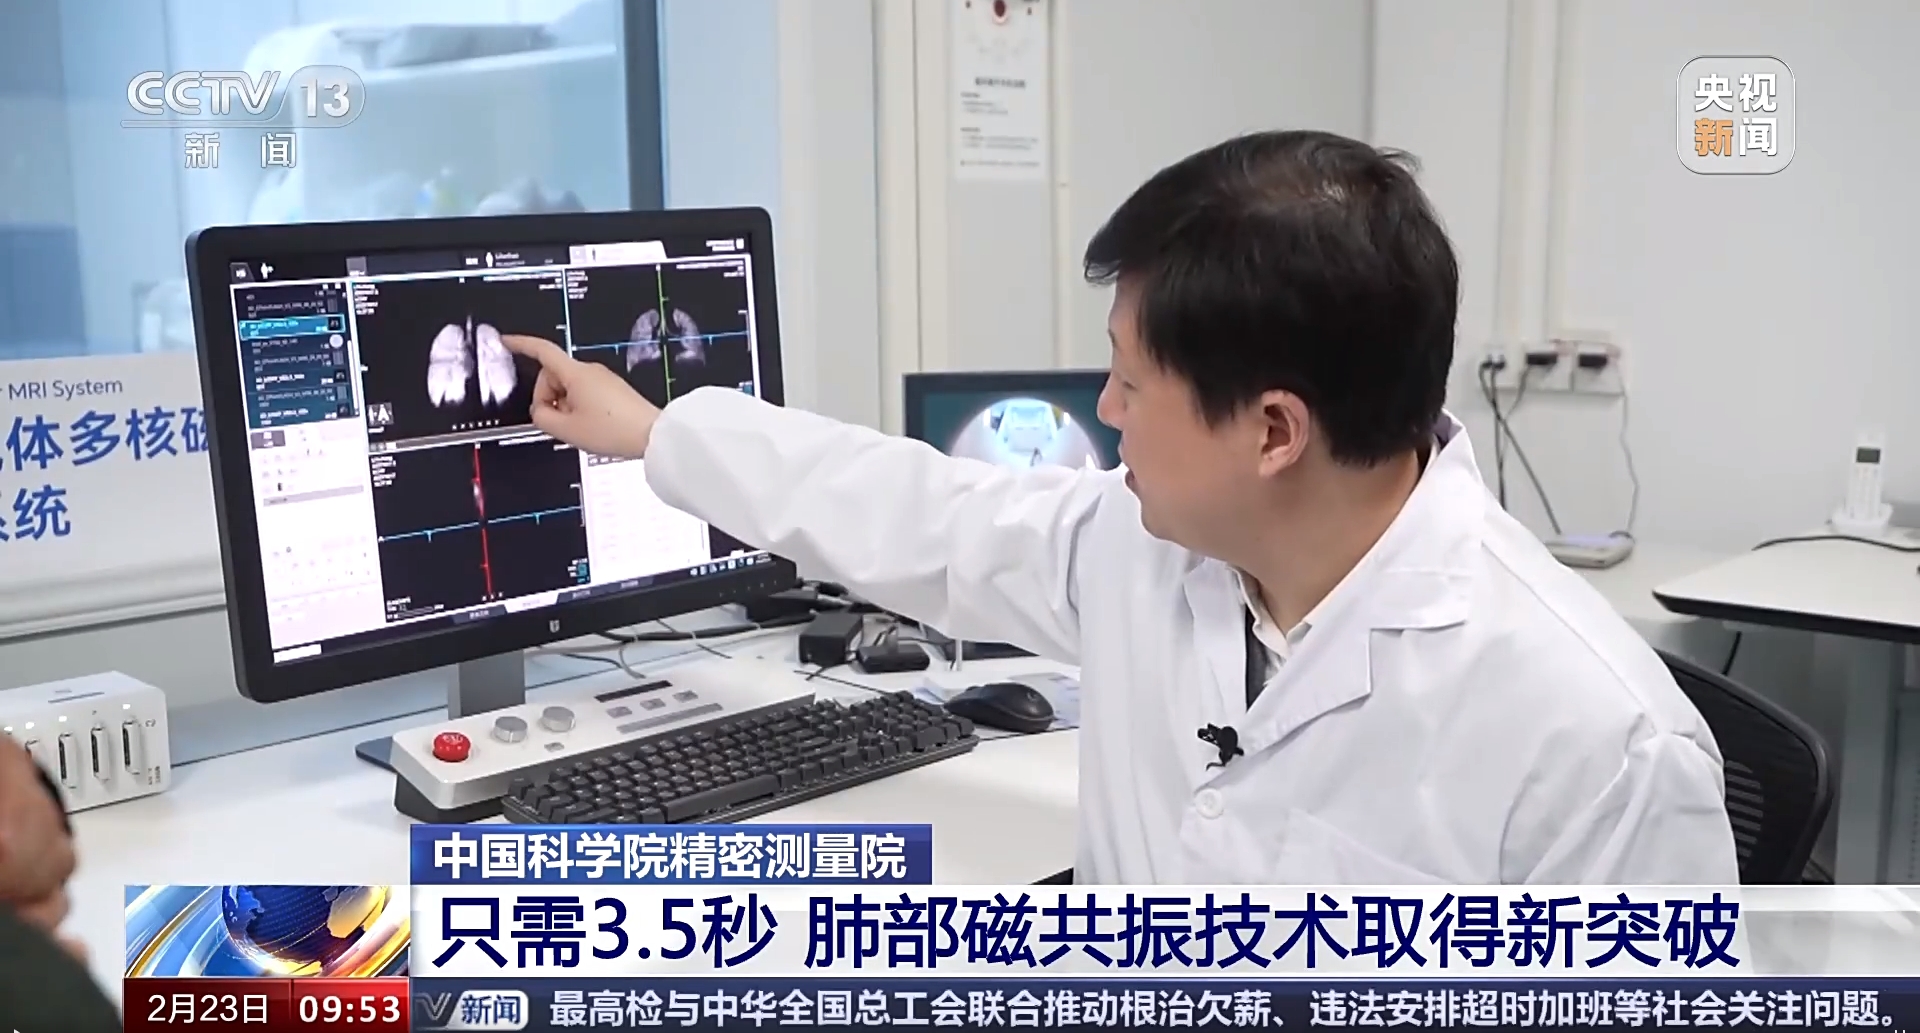 【CCTV13新闻】进军科学更深处！肺部磁共振技术取得新突破 采样时间提升到3.5秒